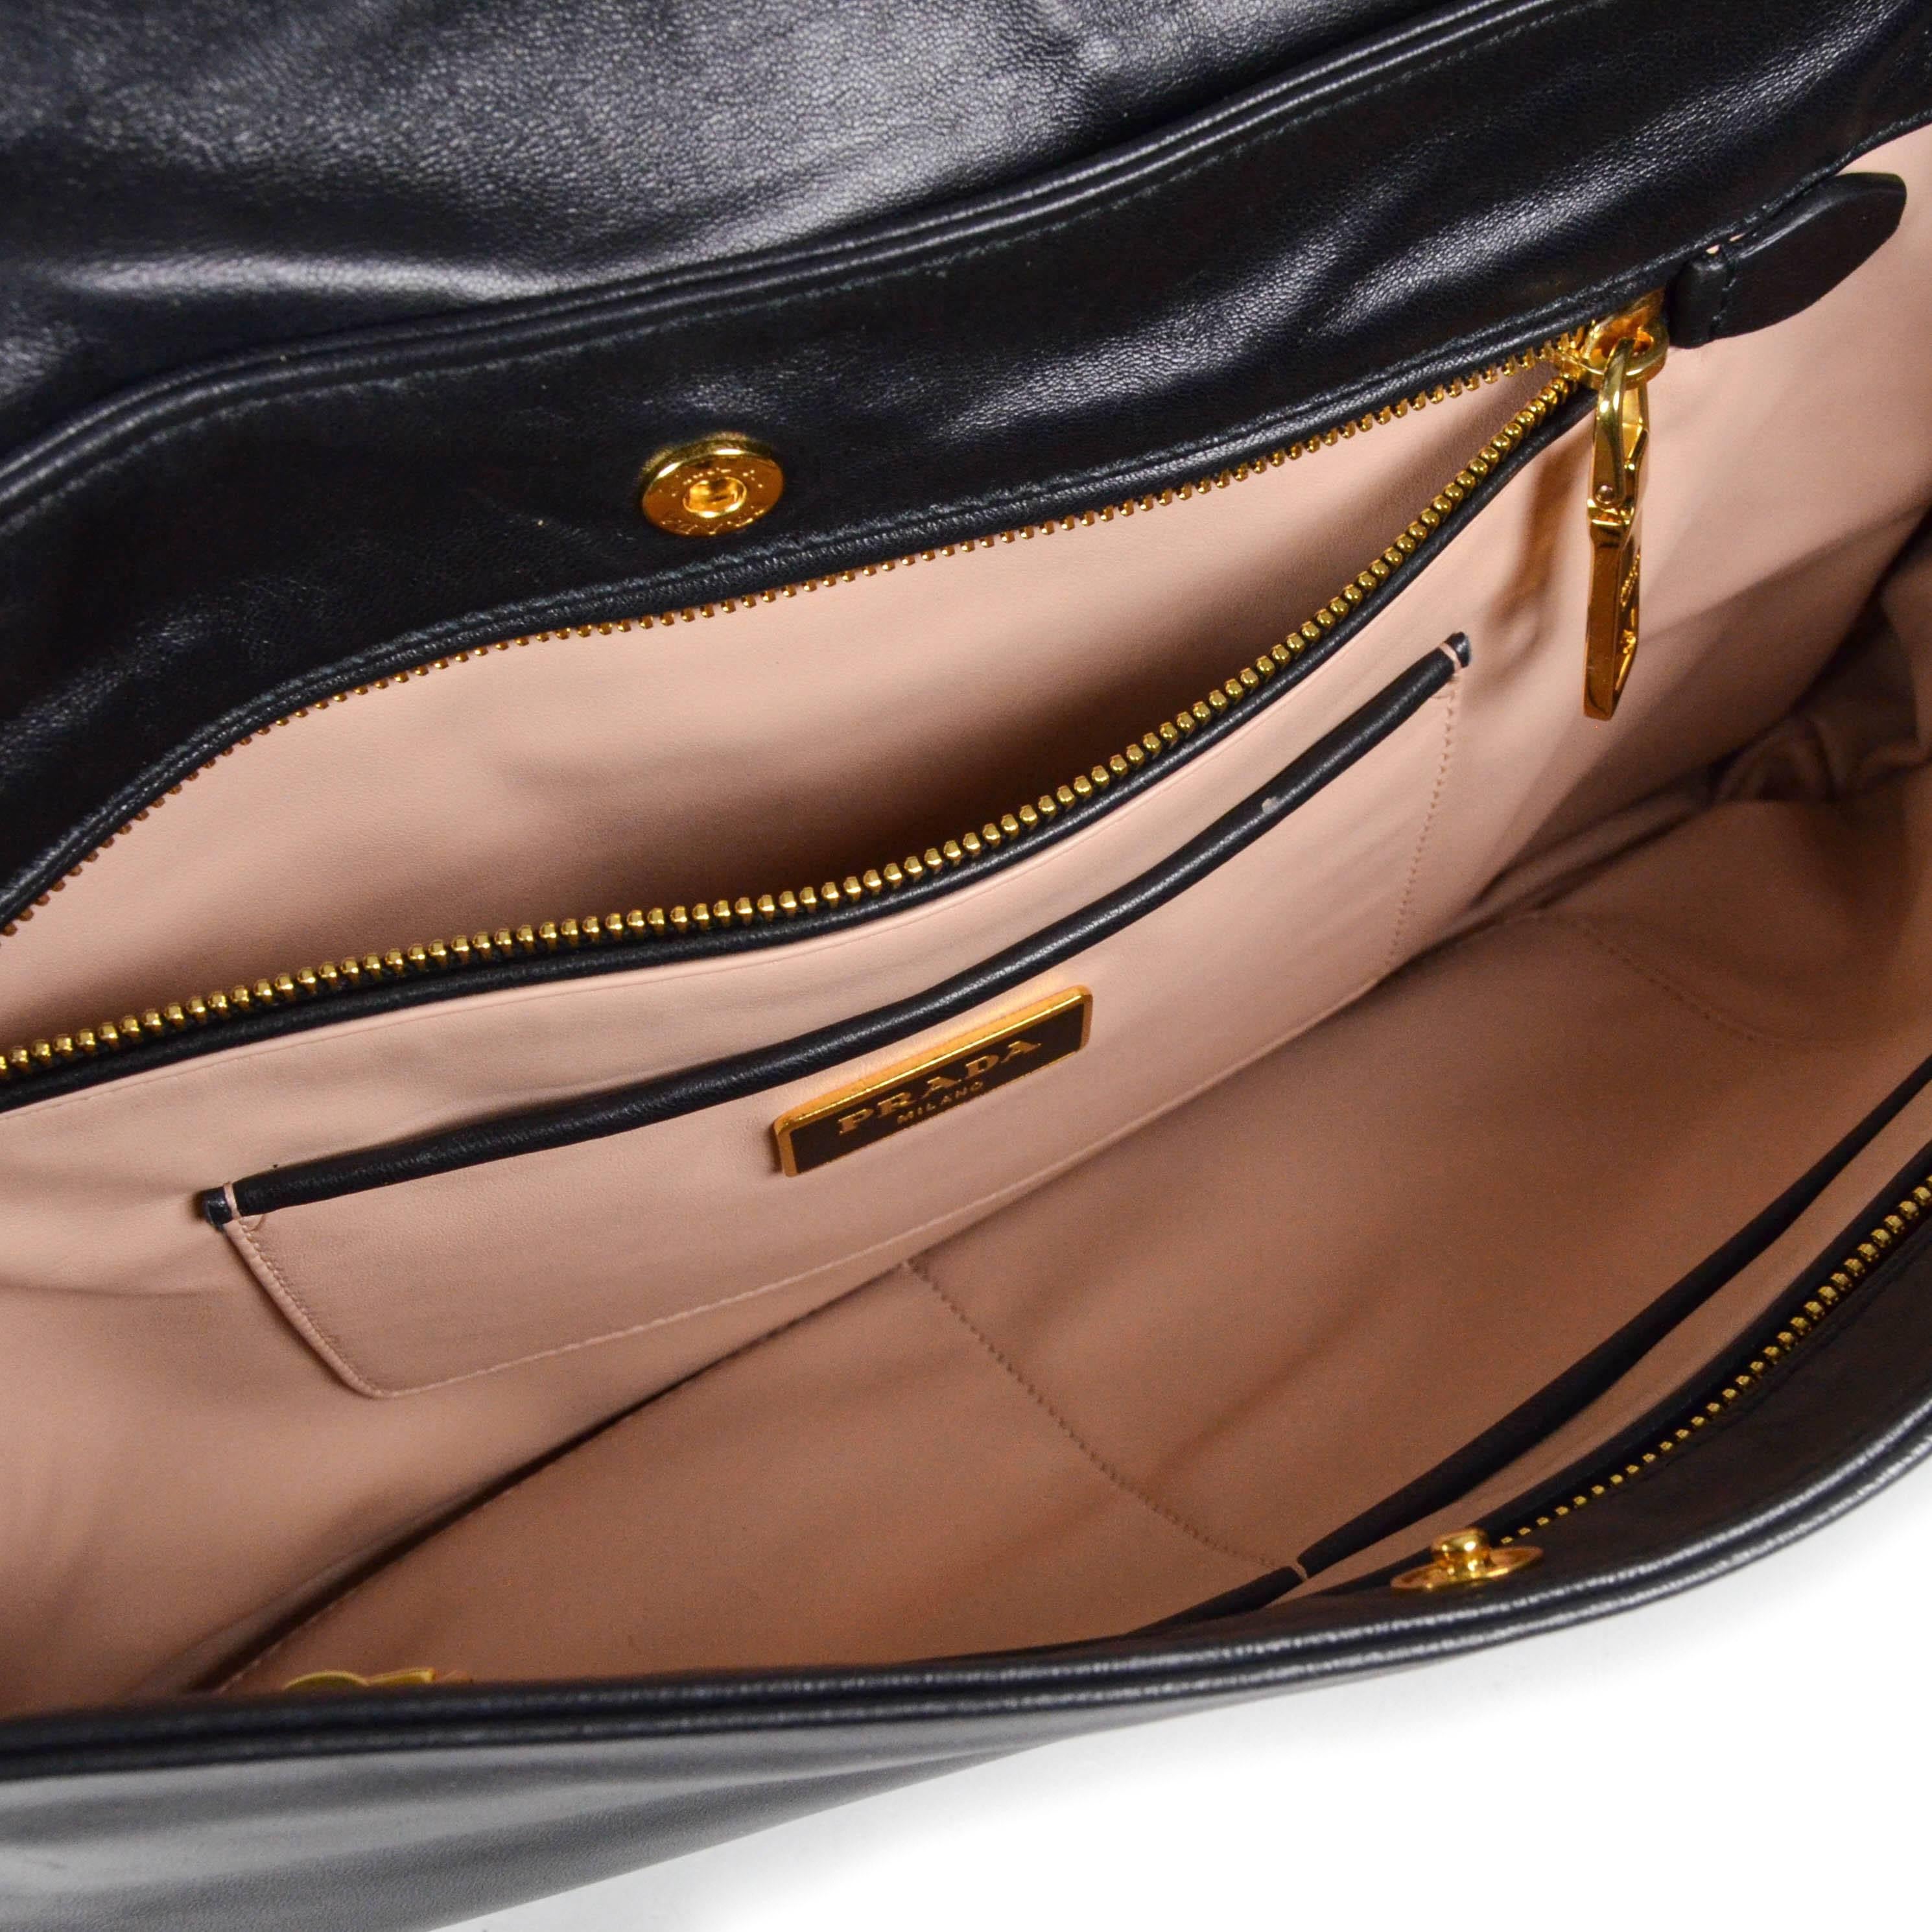 Women's Prada Smoking Lips Large Clutch Bag - Black Leather Kiss Handbag Pink